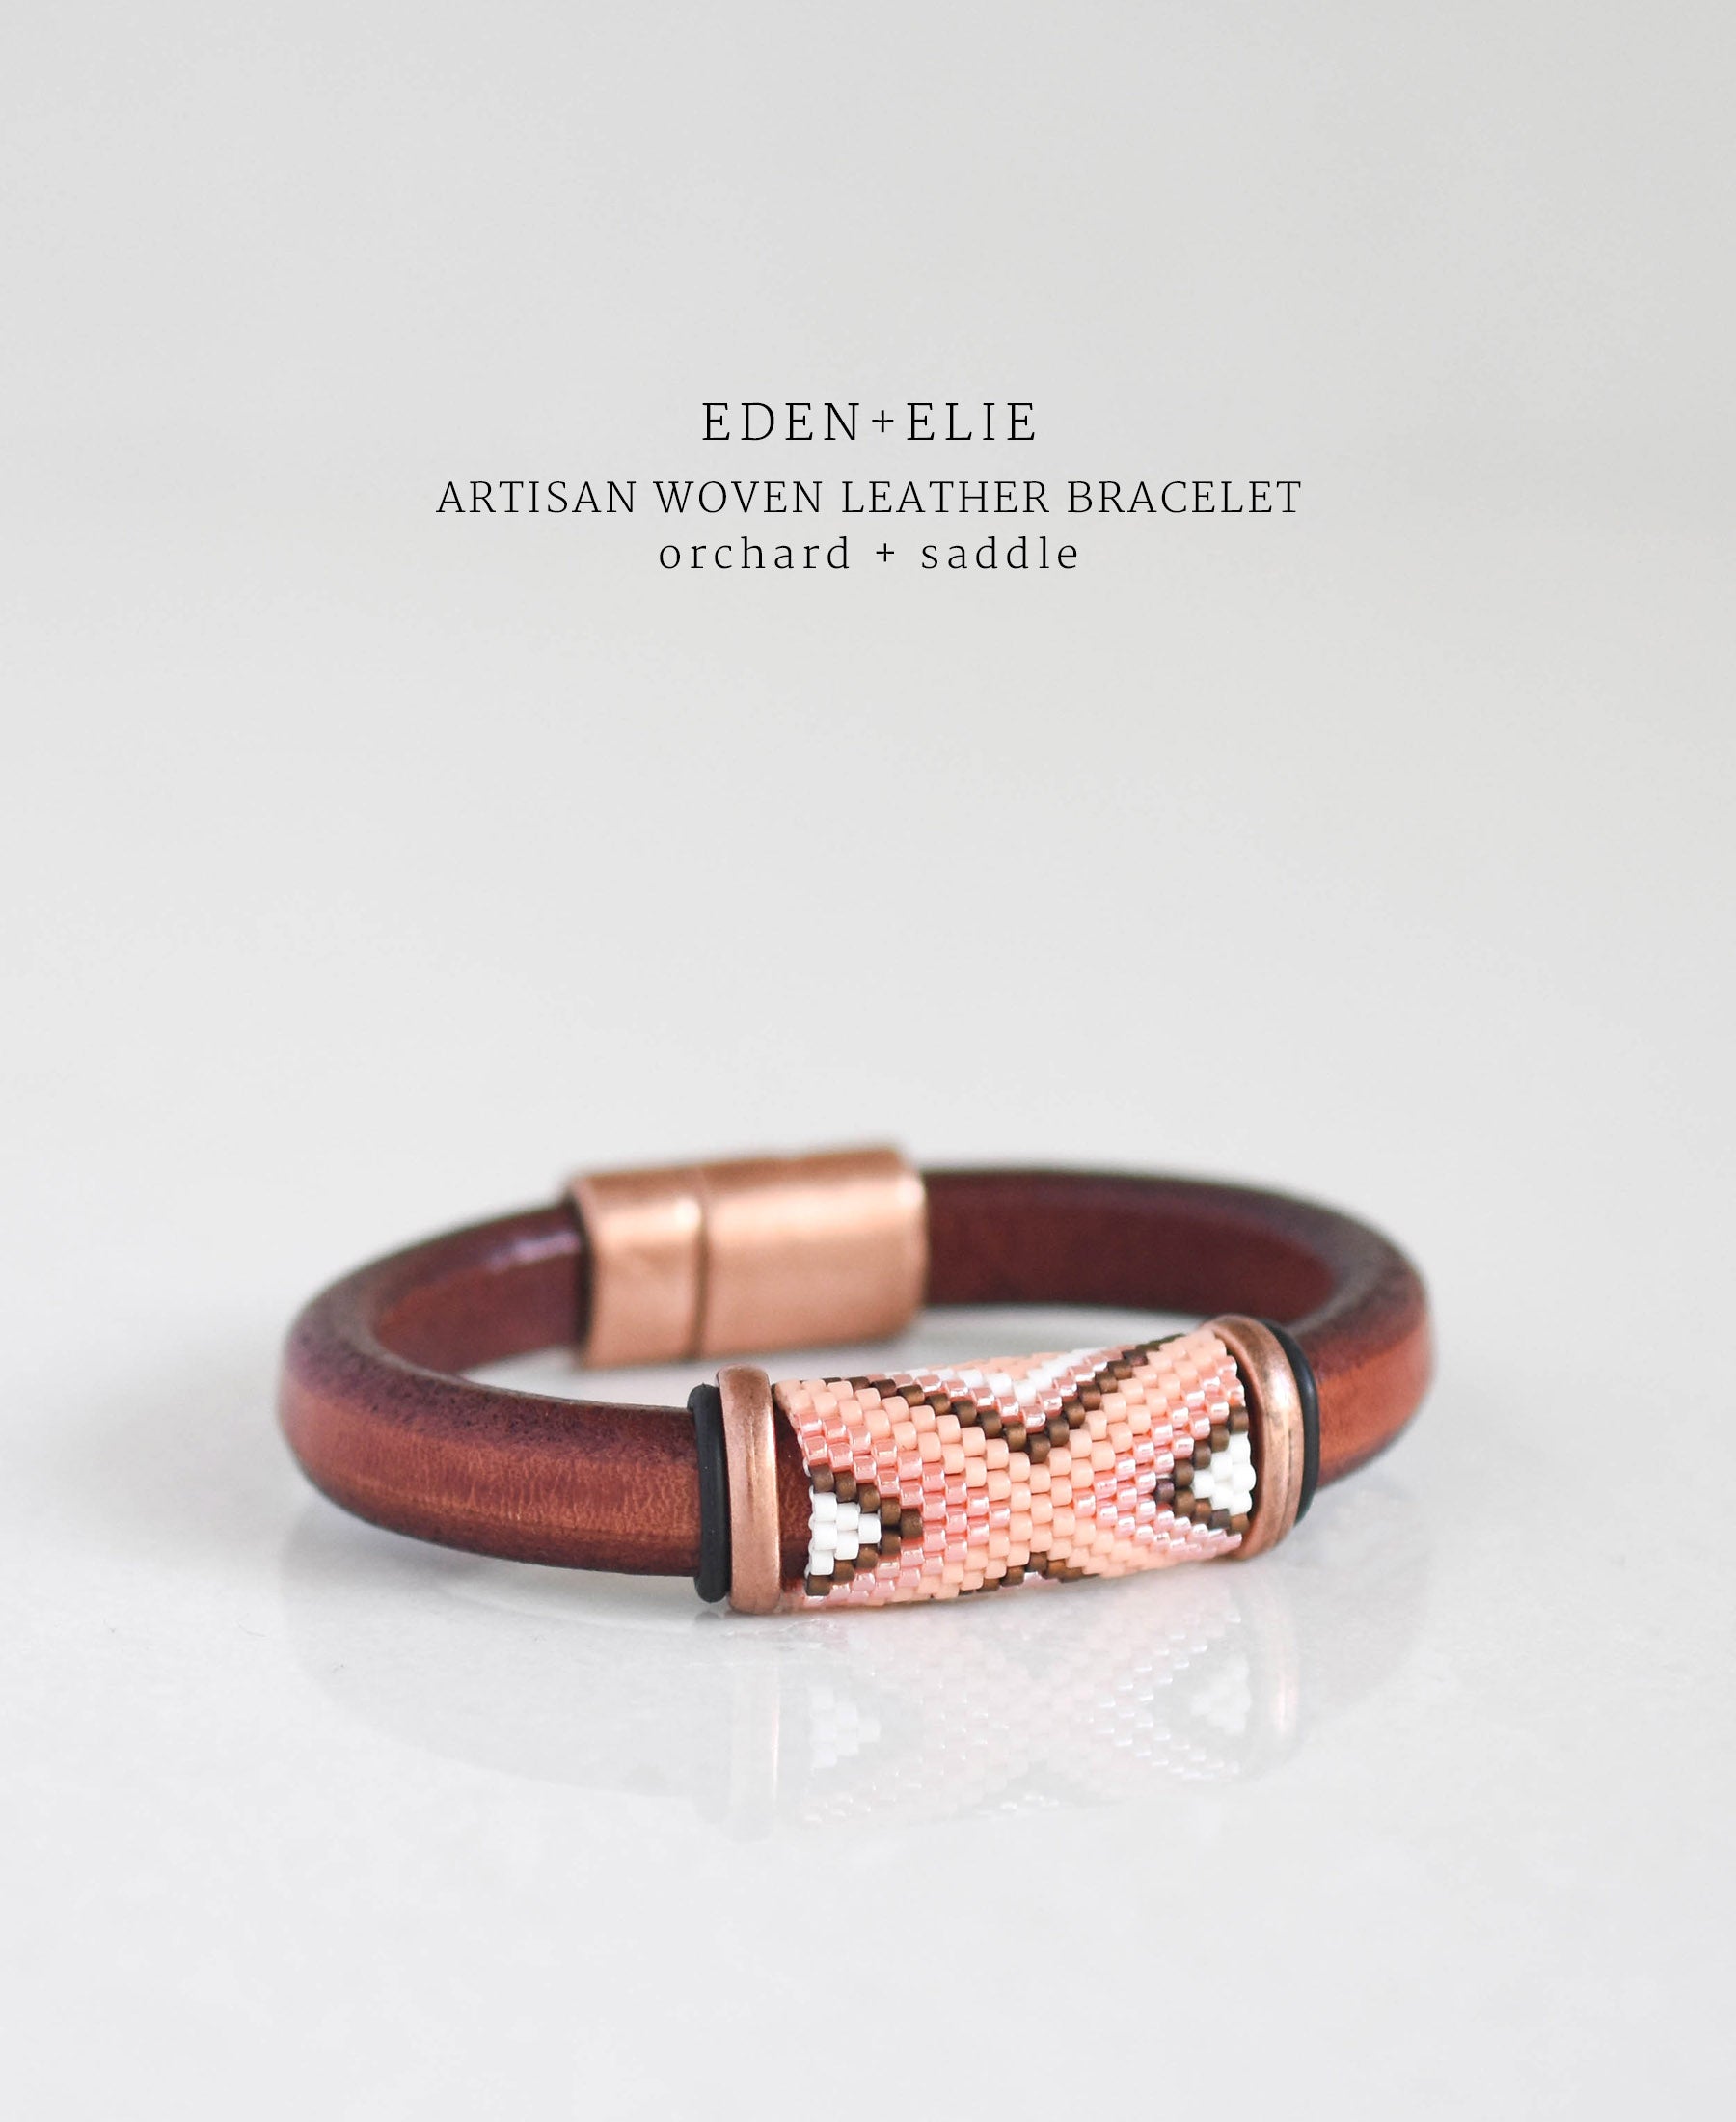 EDEN + ELIE handwoven thick leather bracelet - orchard pink